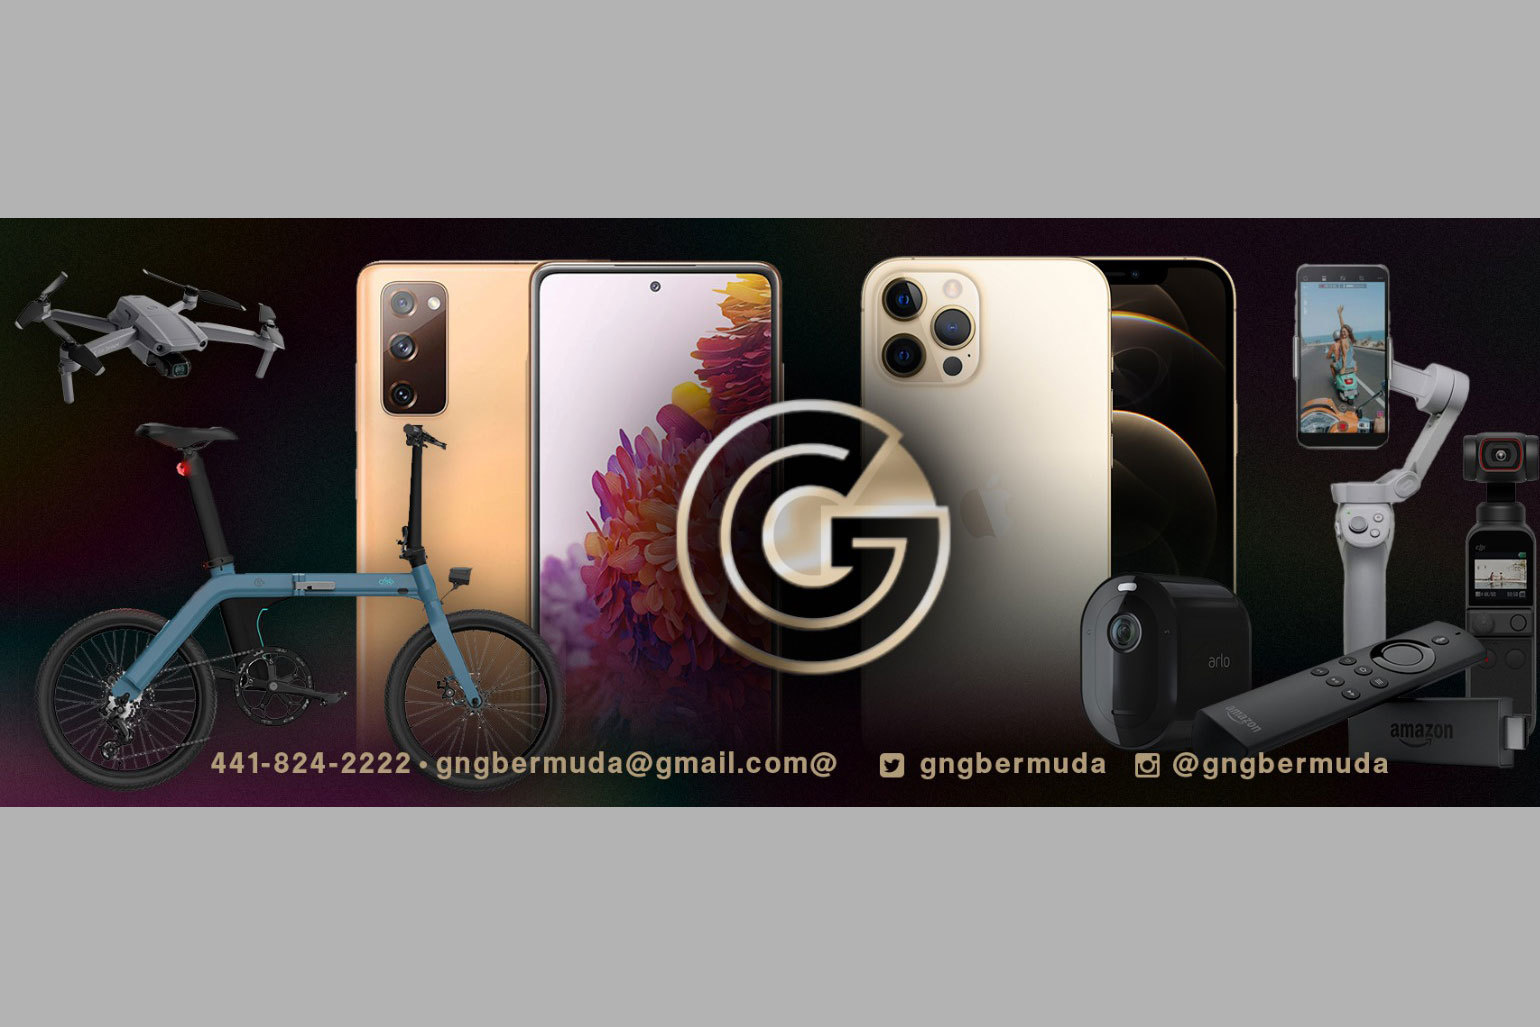 Gear & Gadget (G &G ) Bermuda Ltd